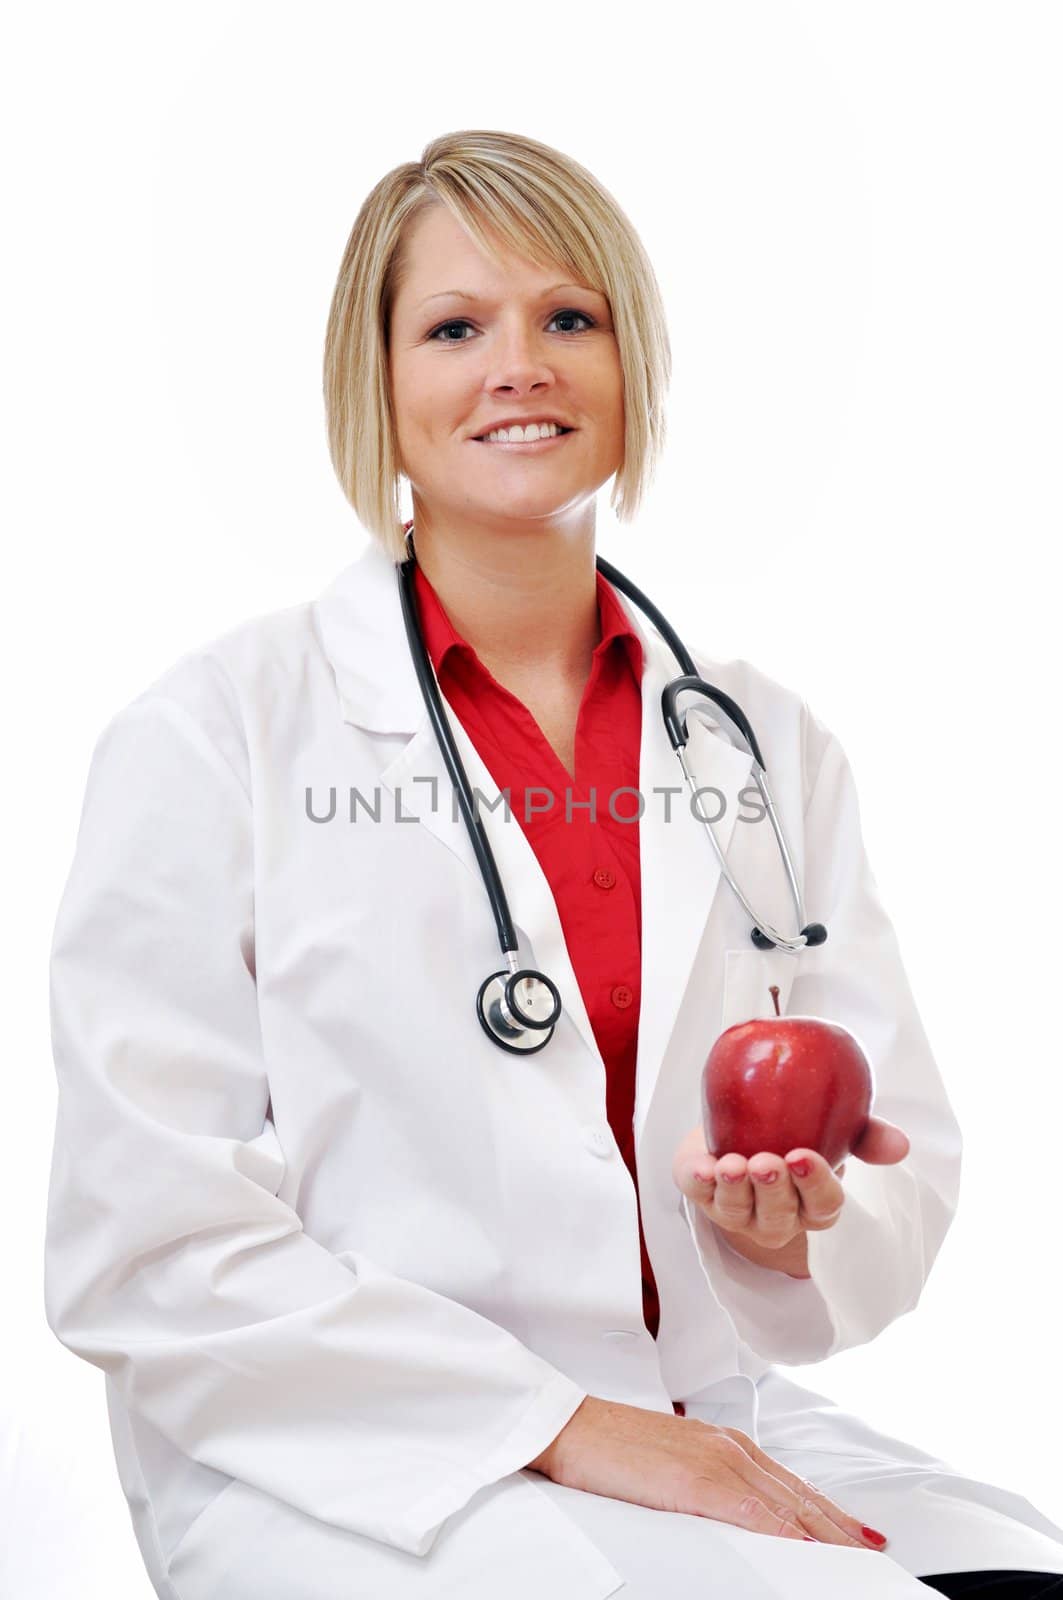 Female doctor holding apple with stethoscope isolated on white background.